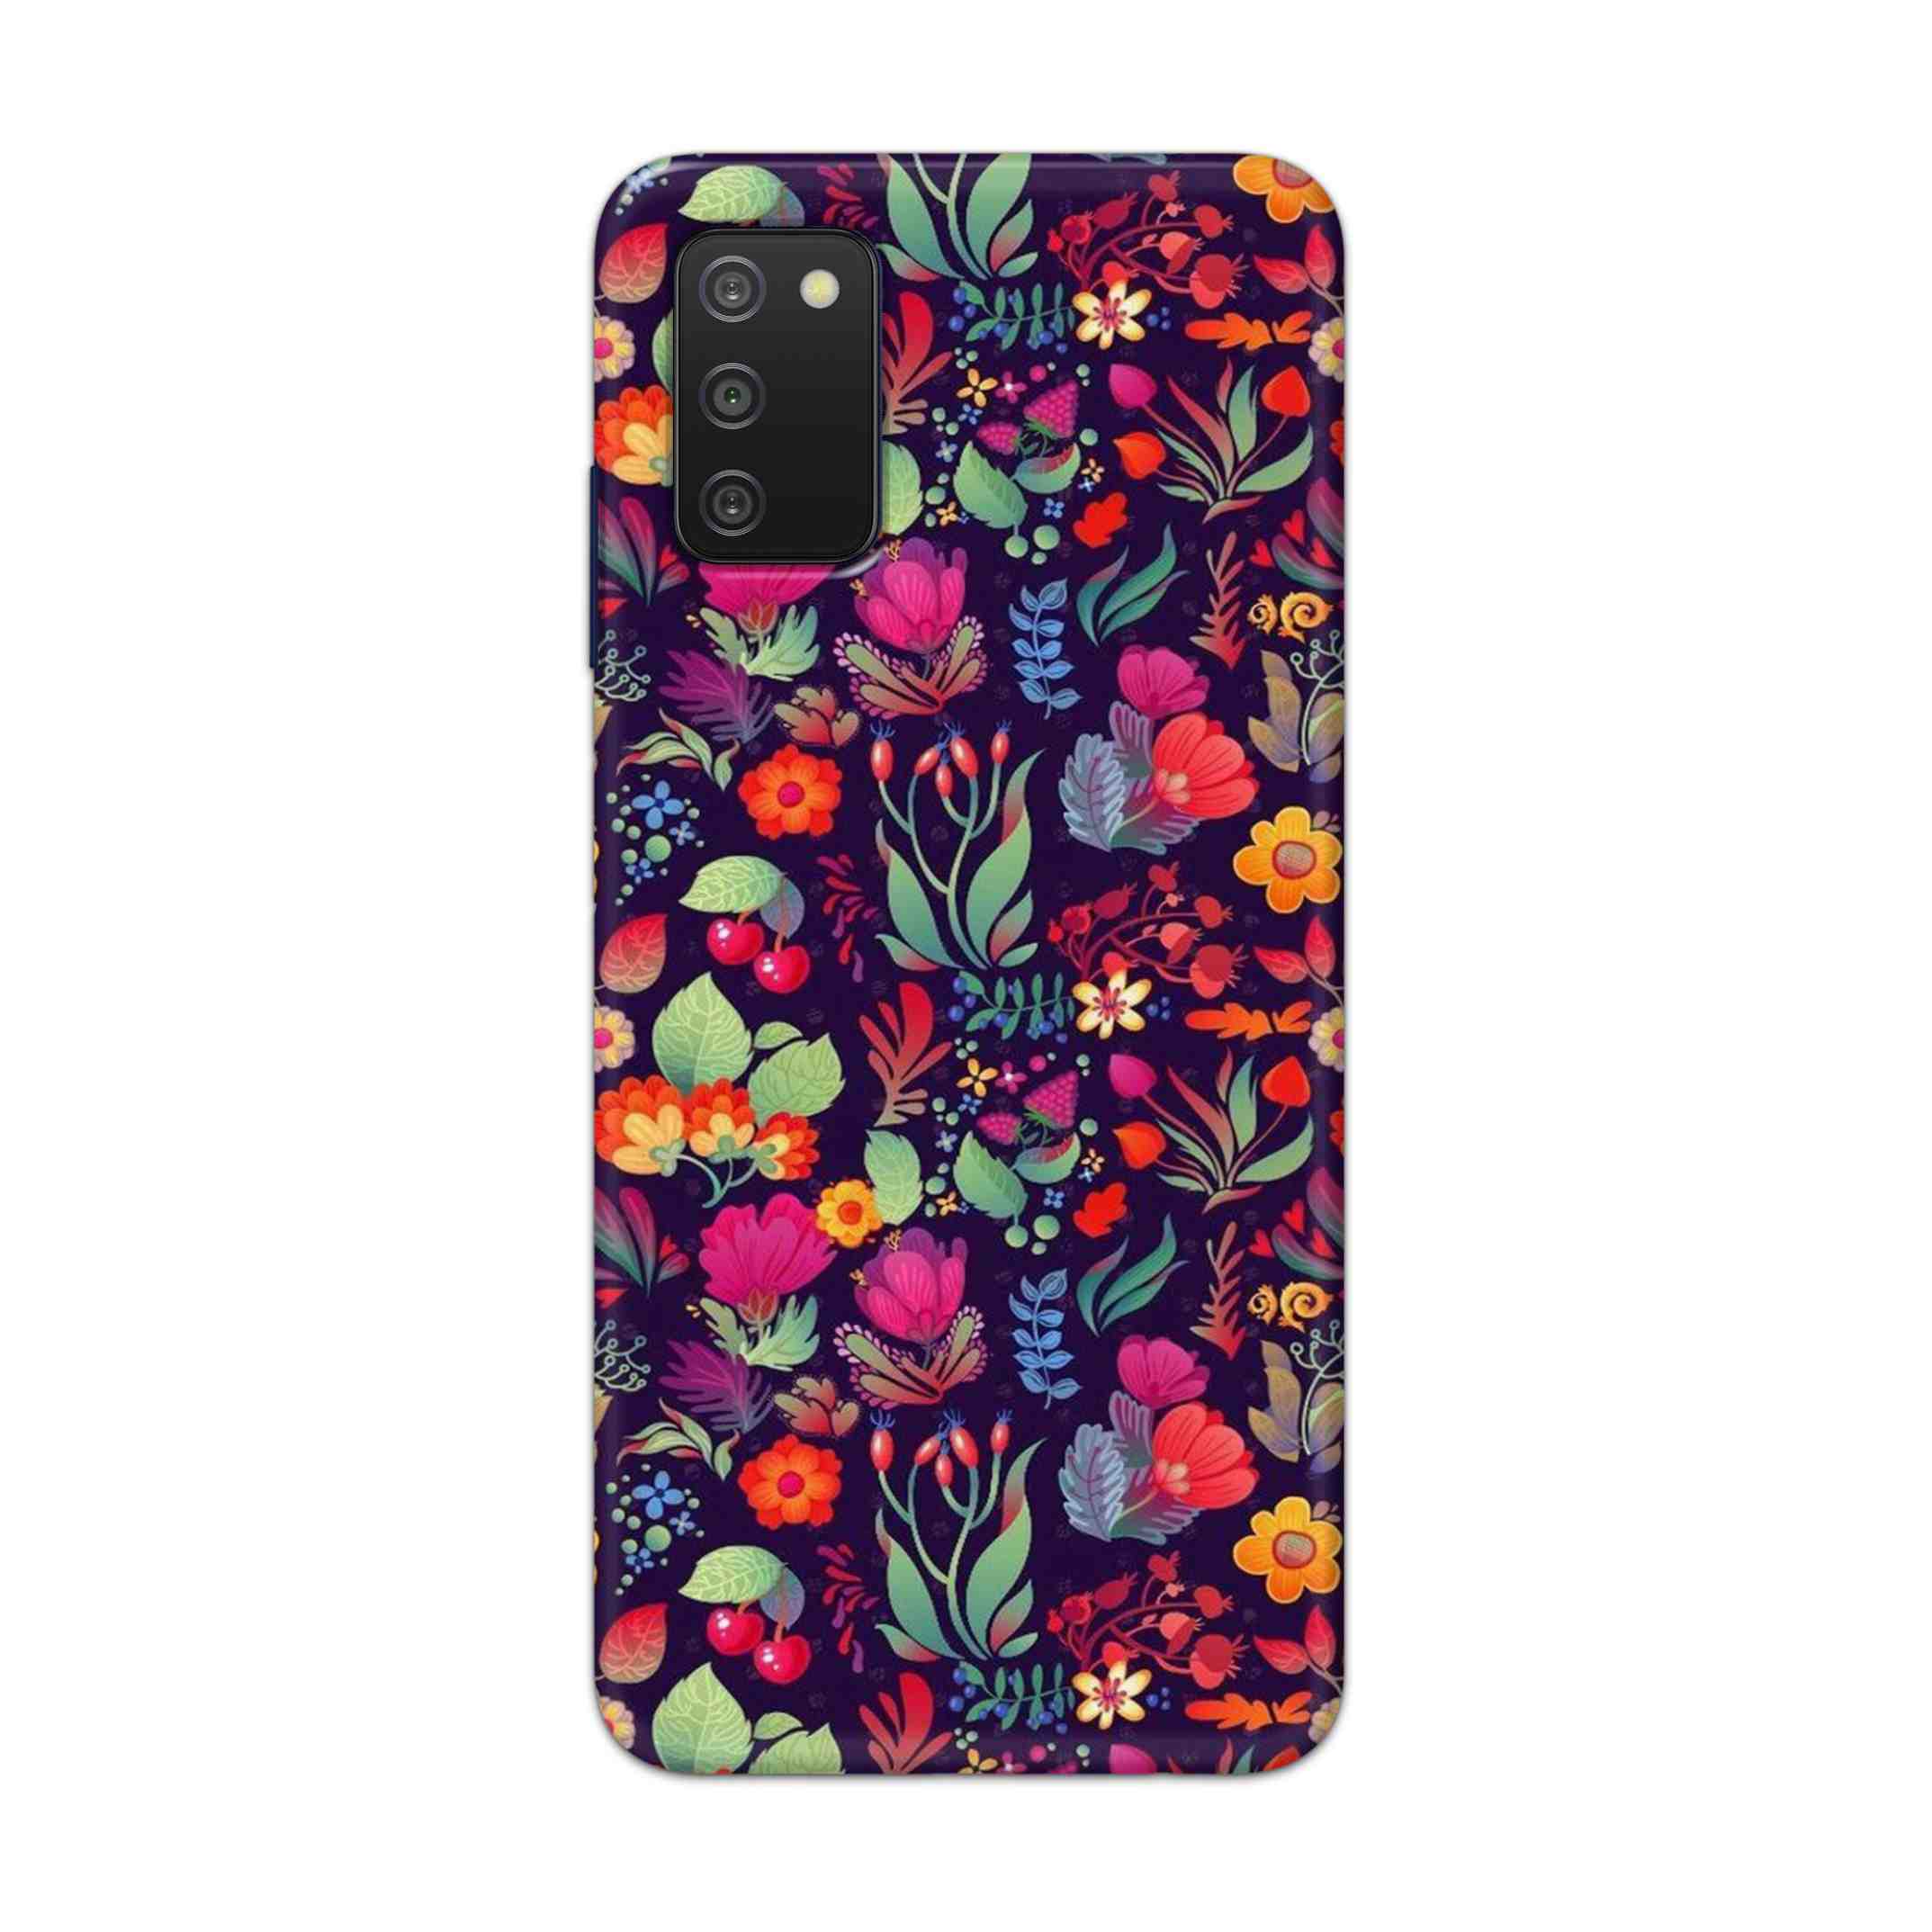 Buy Fruits Flower Hard Back Mobile Phone Case Cover For Samsung A03s Online